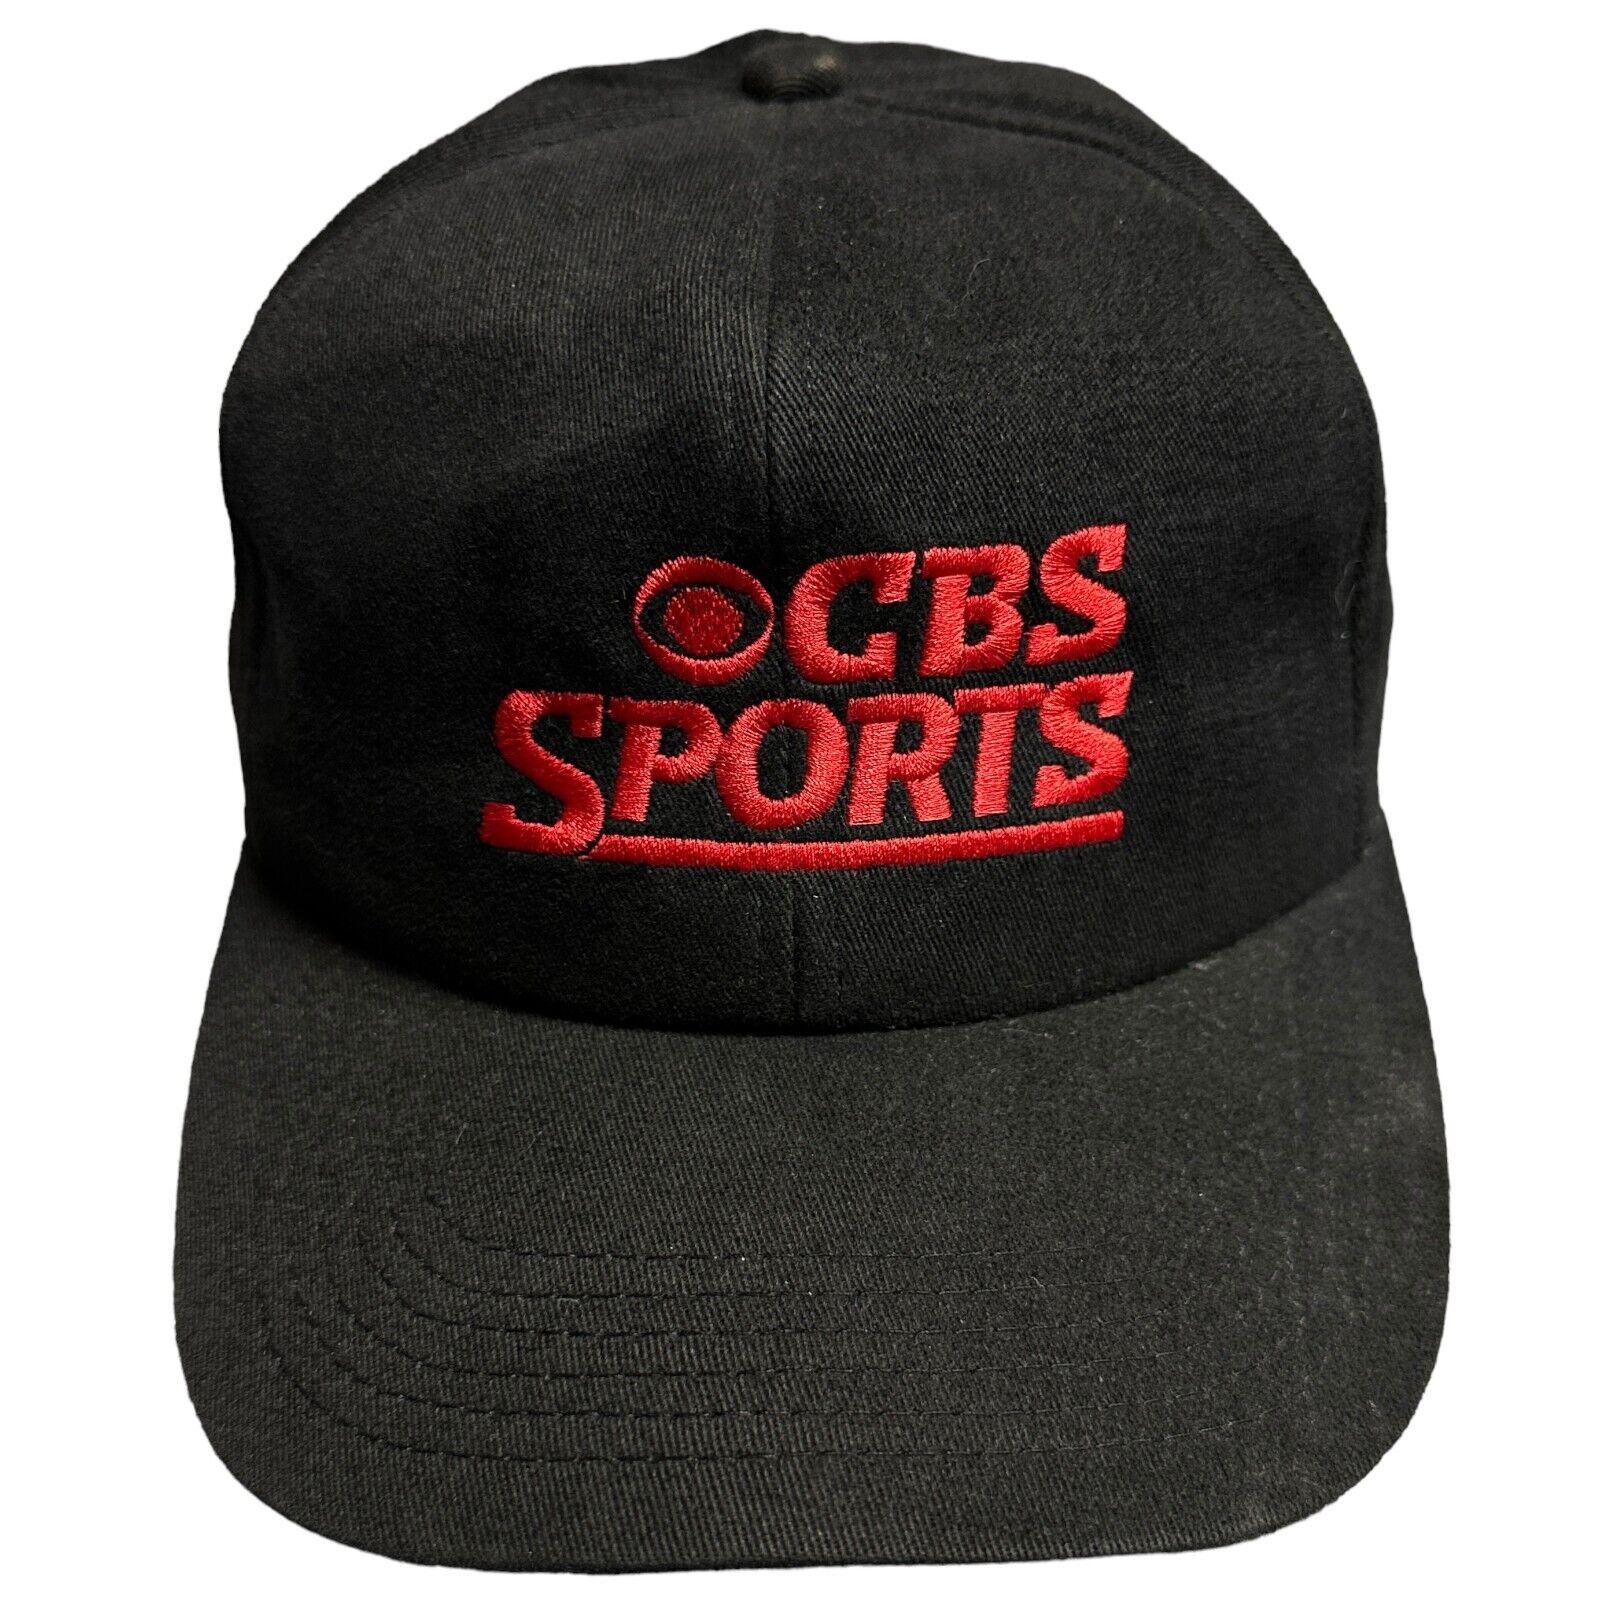 Vintage CBS Sports Racing K Products Hat Black Red Adjustable Snapback Cap USA *